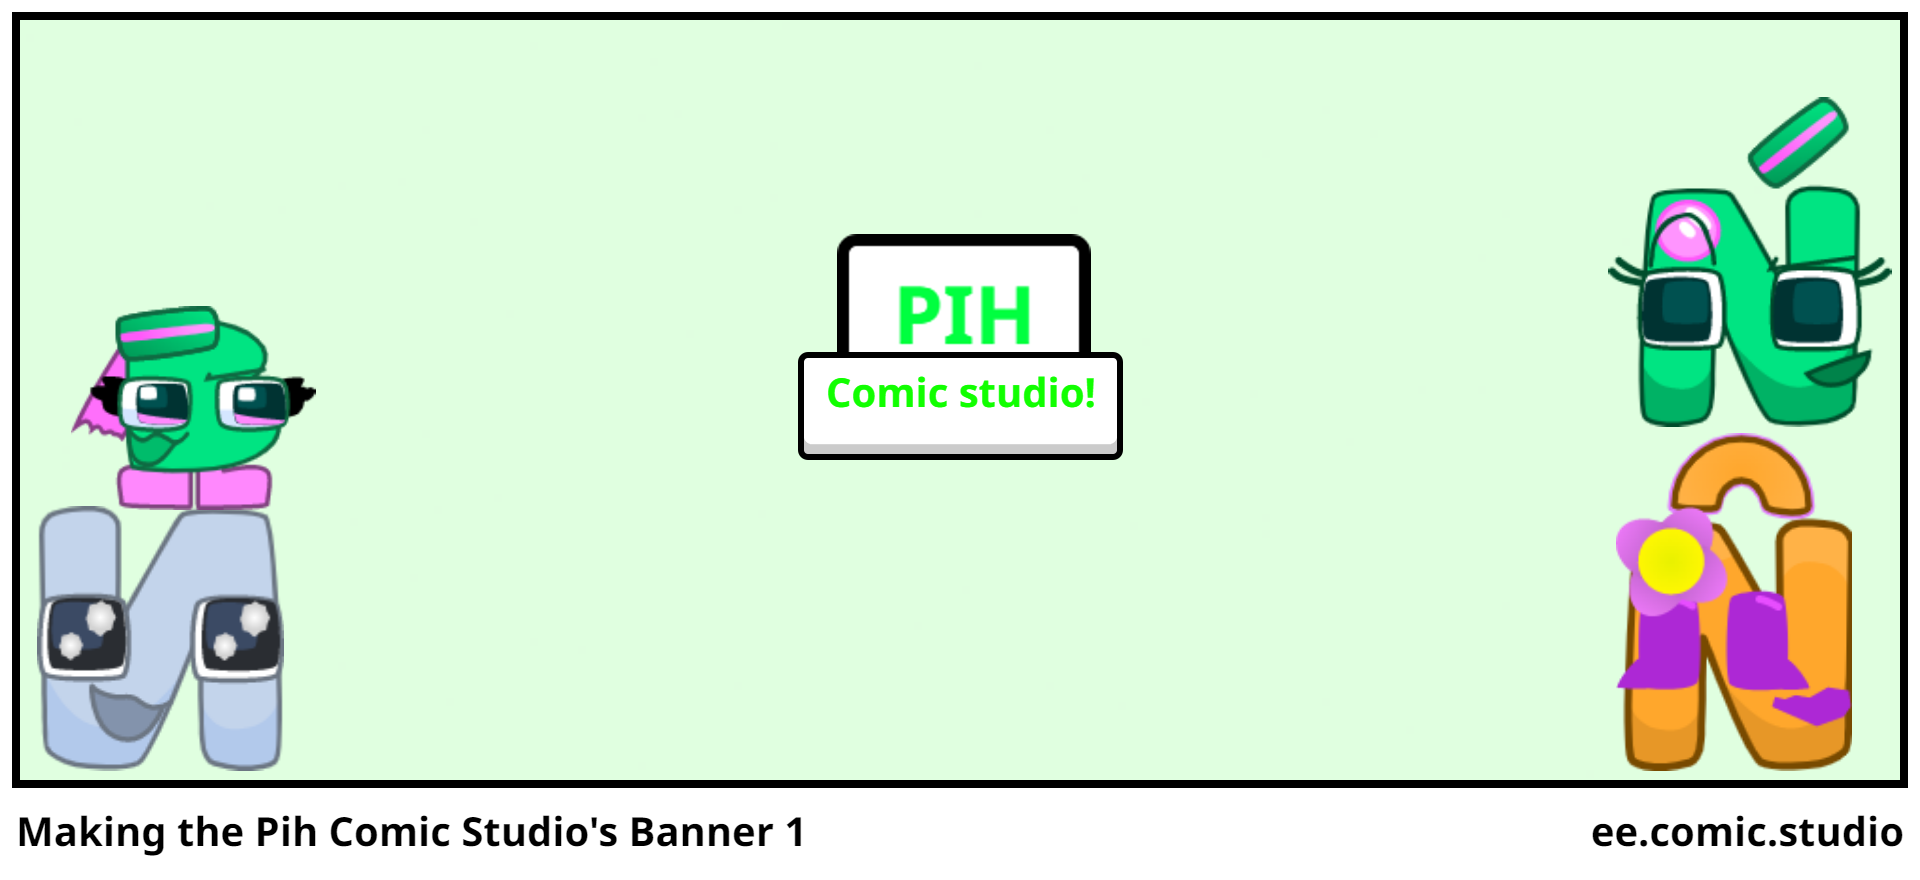 Making the Pih Comic Studio's Banner 1